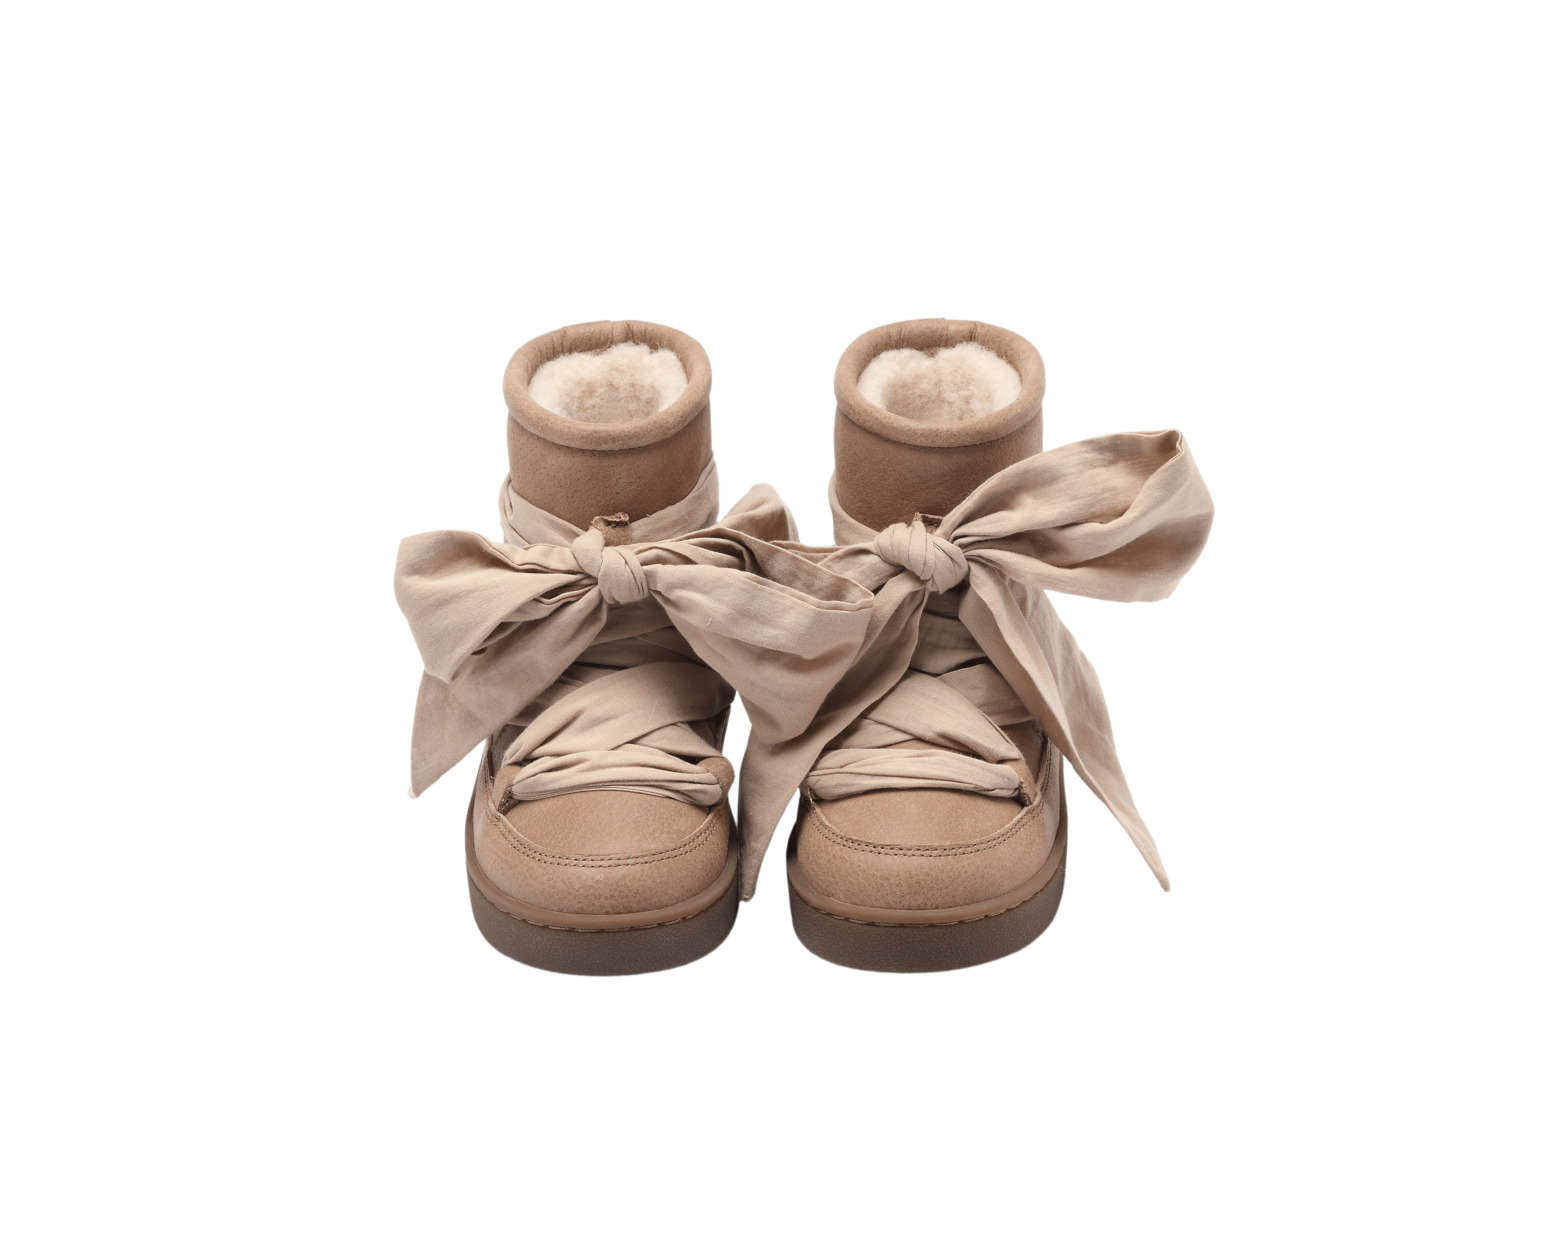 Ganza Boots | Hazelnut Leather